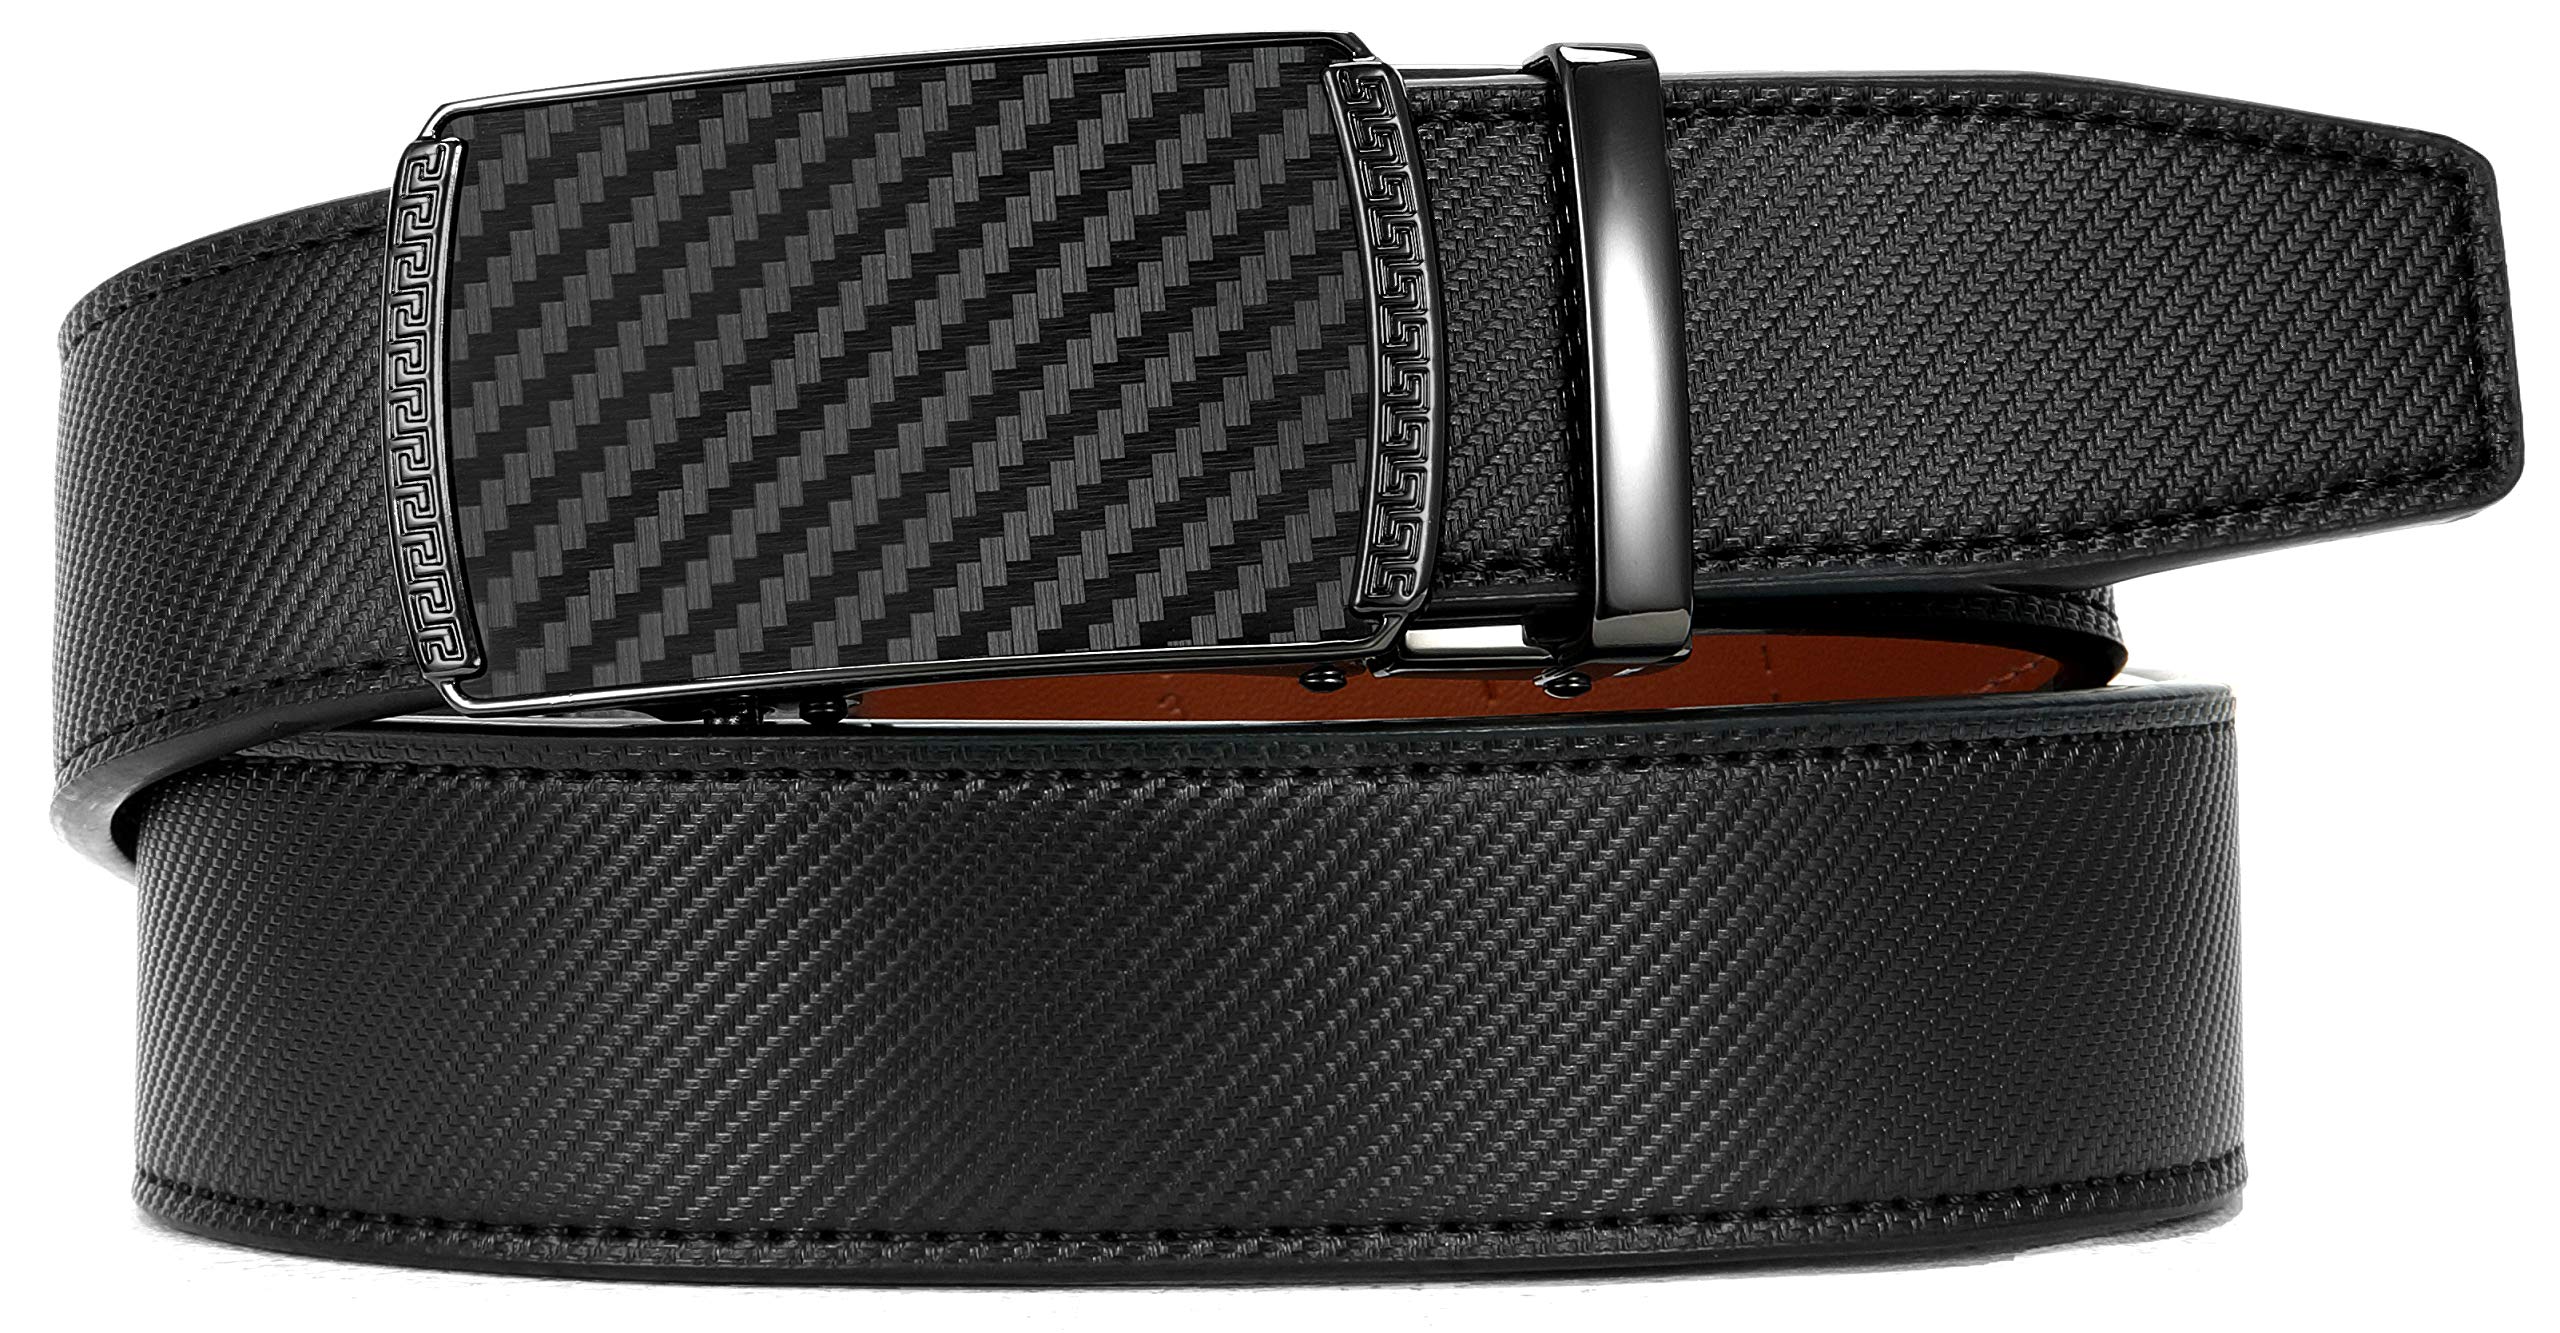 CHAOREN Leather Ratchet Belt Men - Customizable Fit, Effortless Style (35mm)